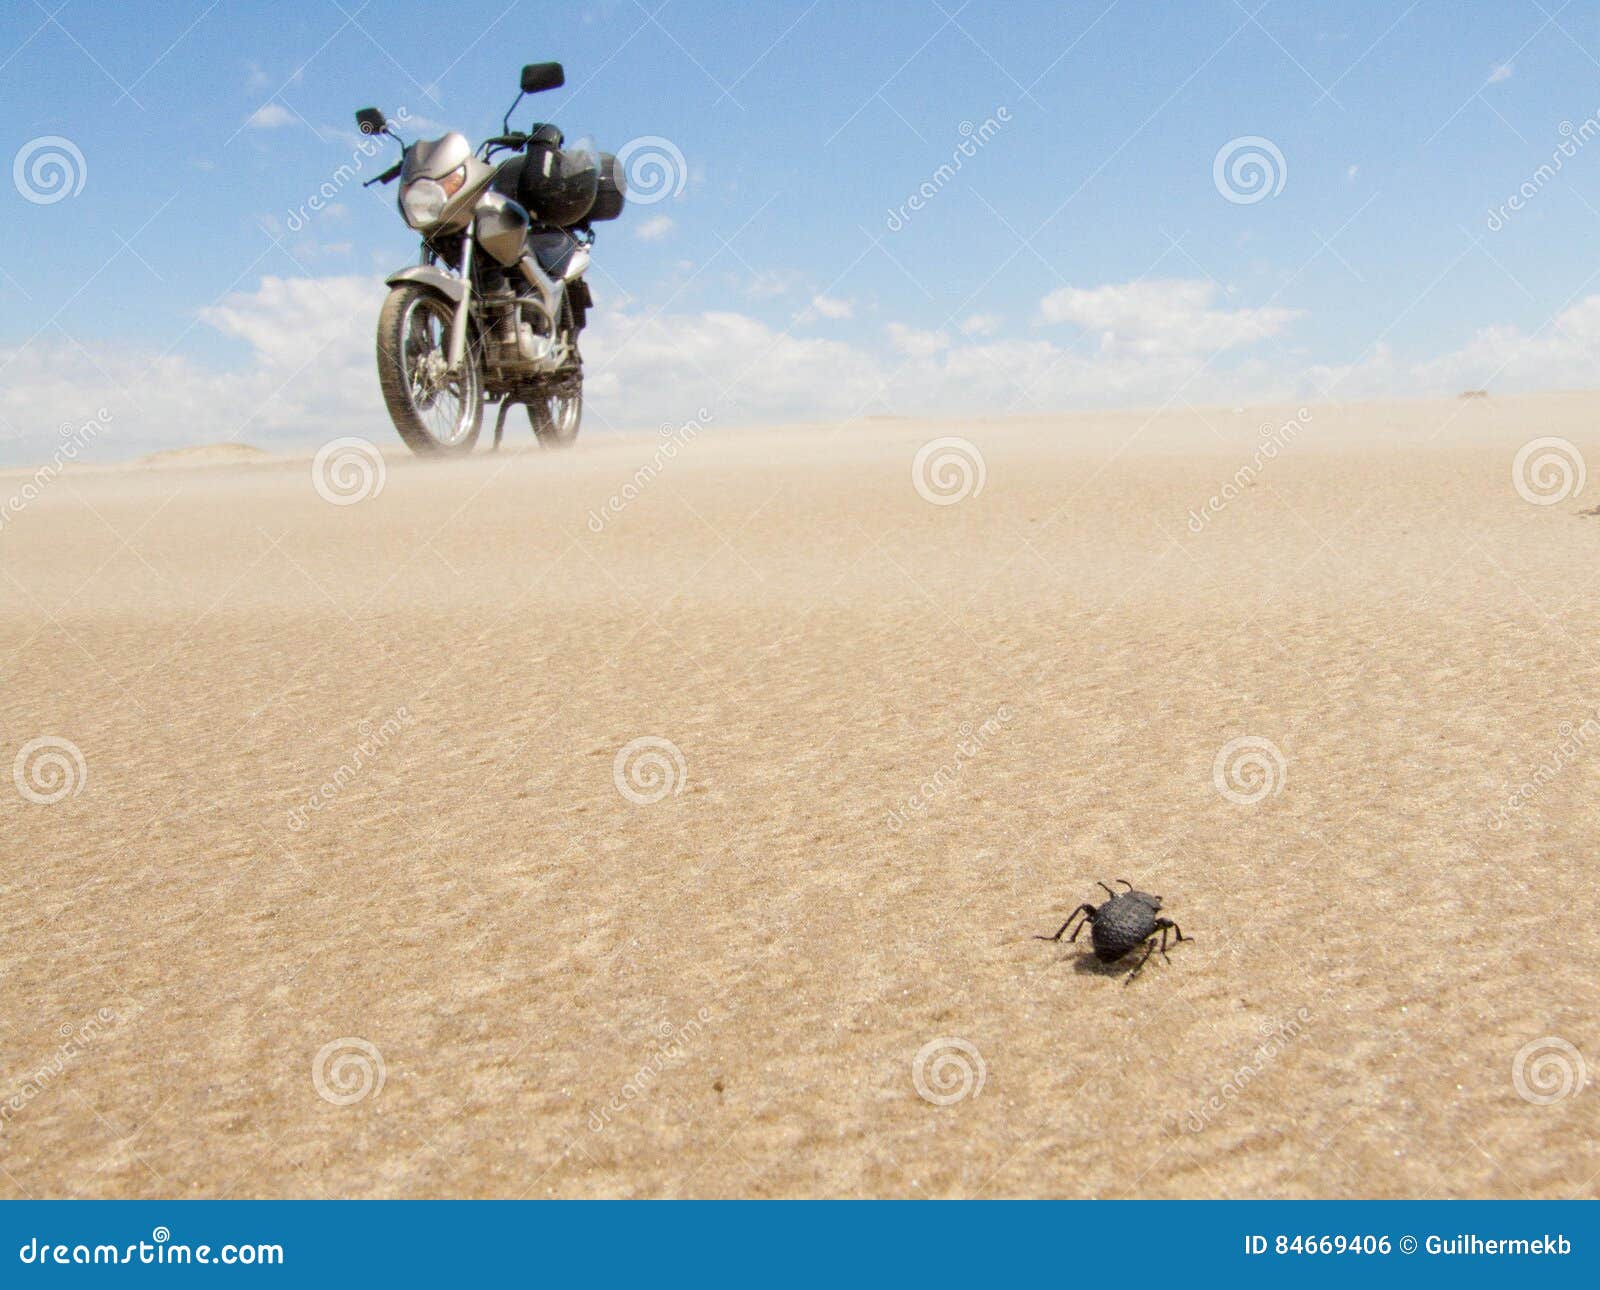 beetle and motorcycle